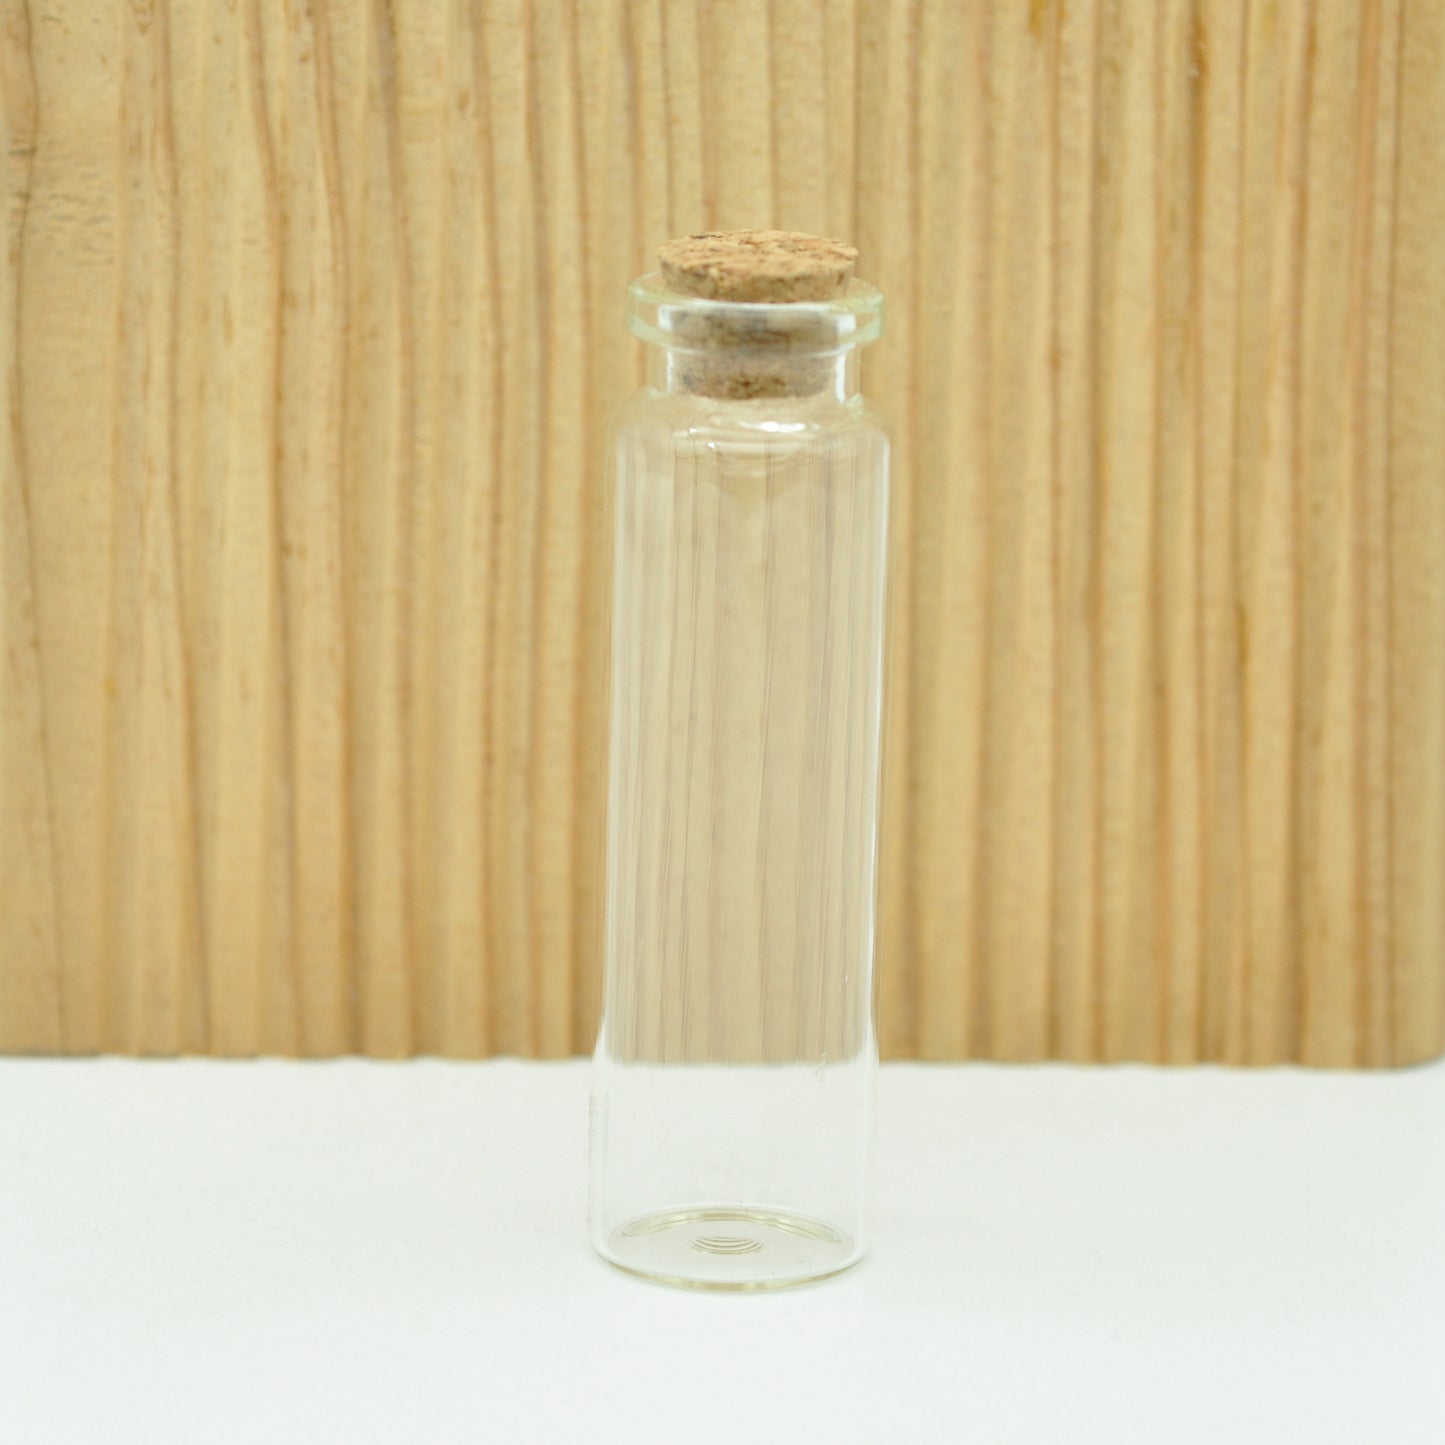 Bottle with cork for storage / gift idea / jar